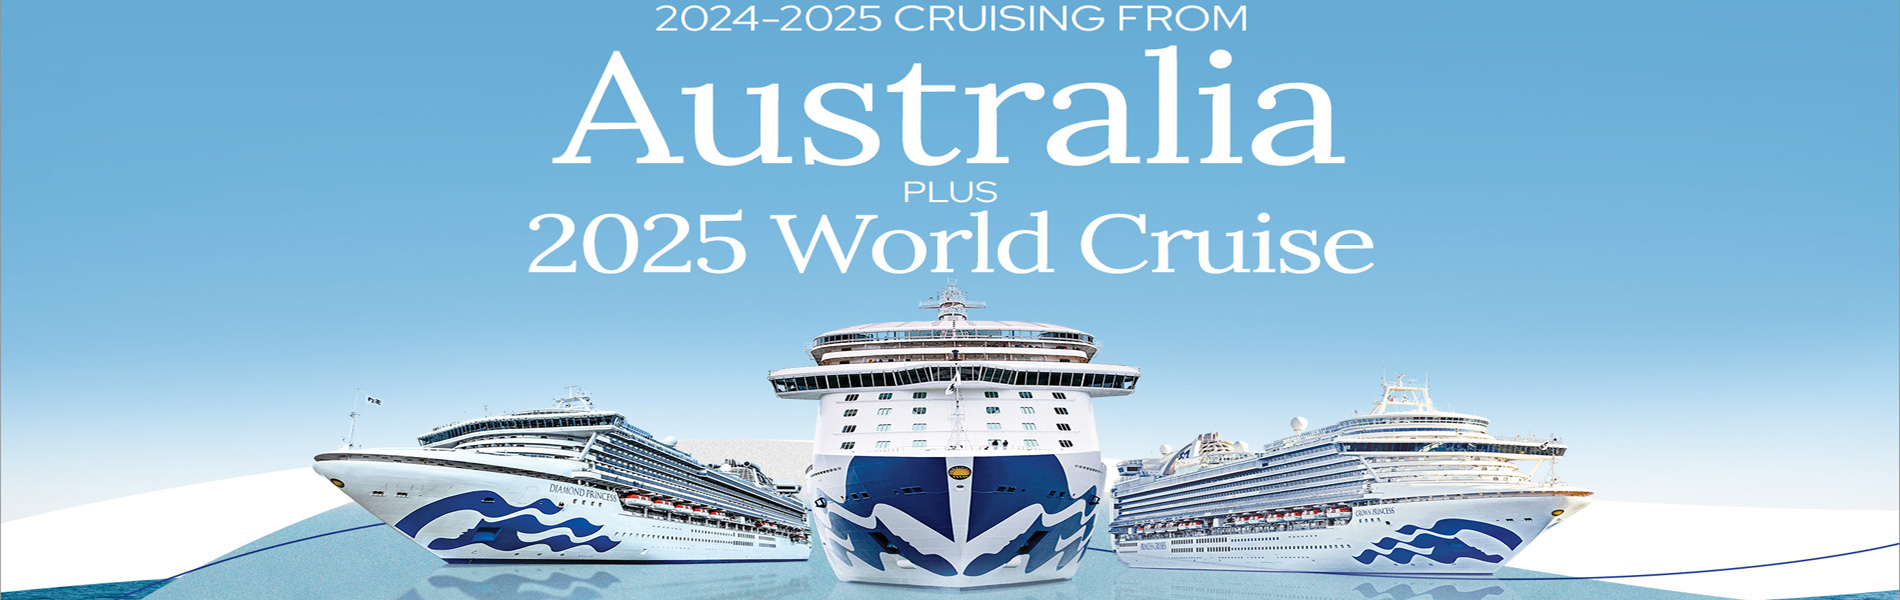 Princess 2024-2025 cruising from Australia